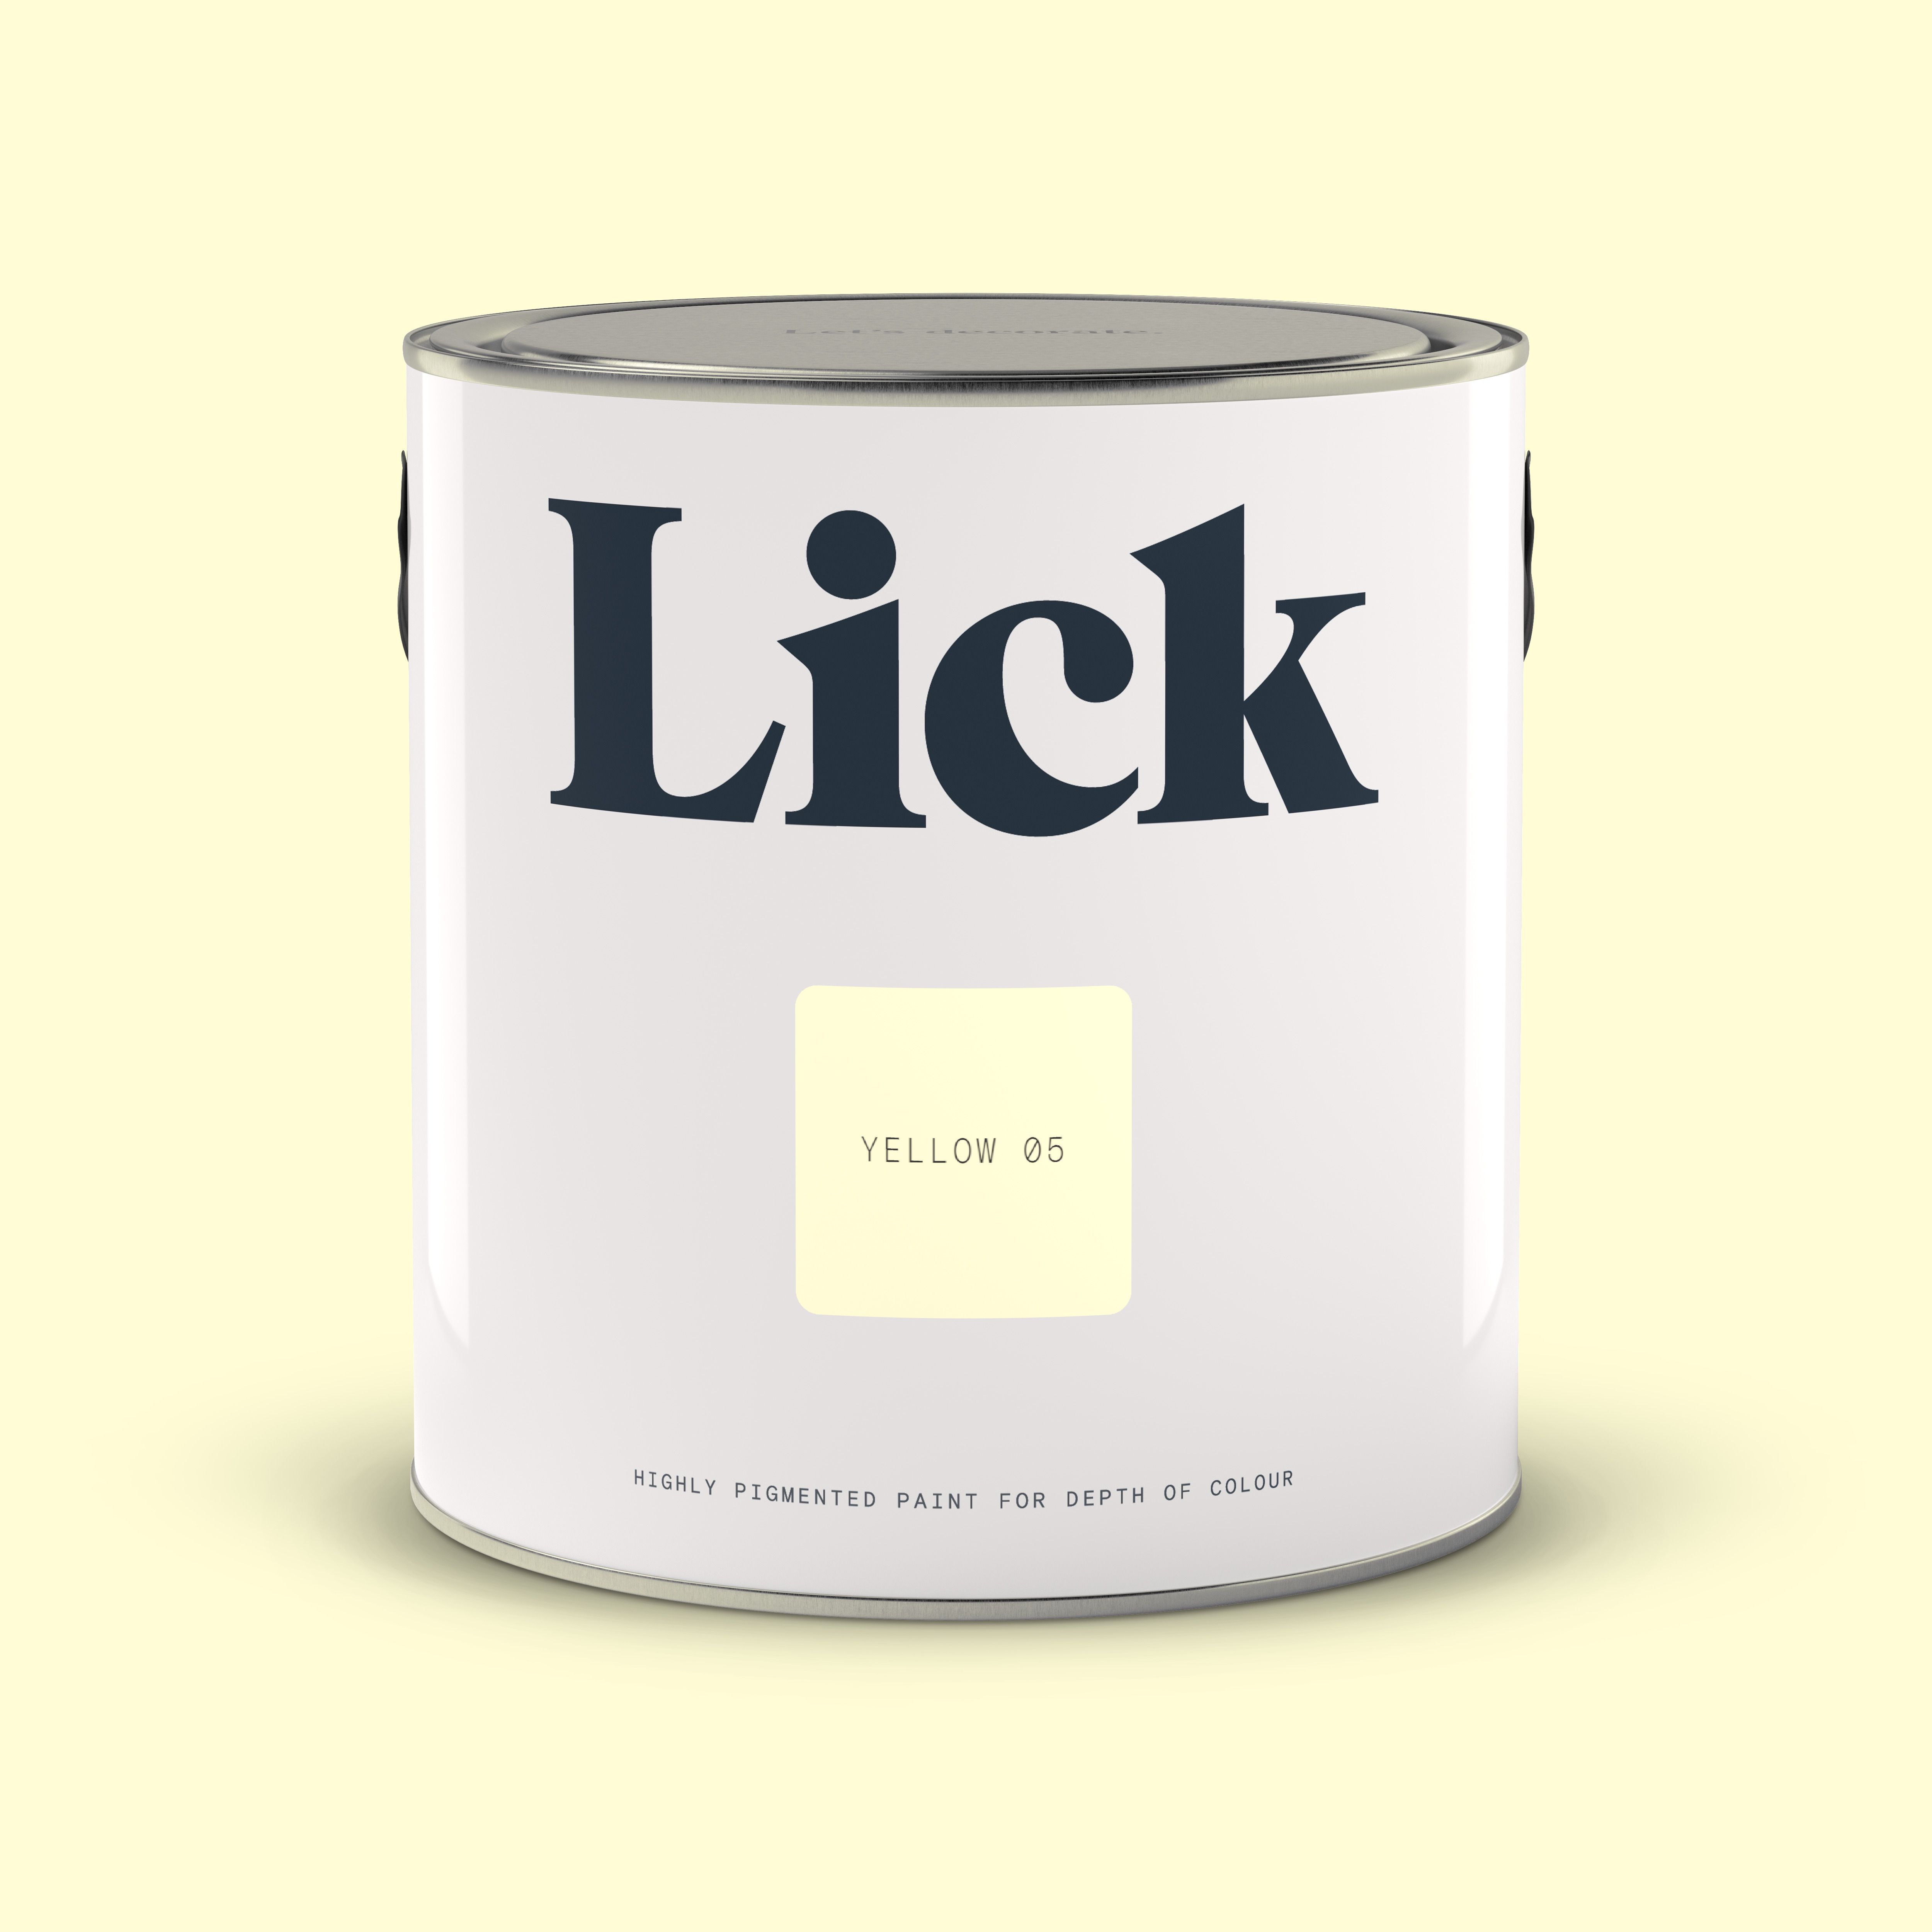 Lick Yellow 05 Matt Emulsion paint, 2.5L